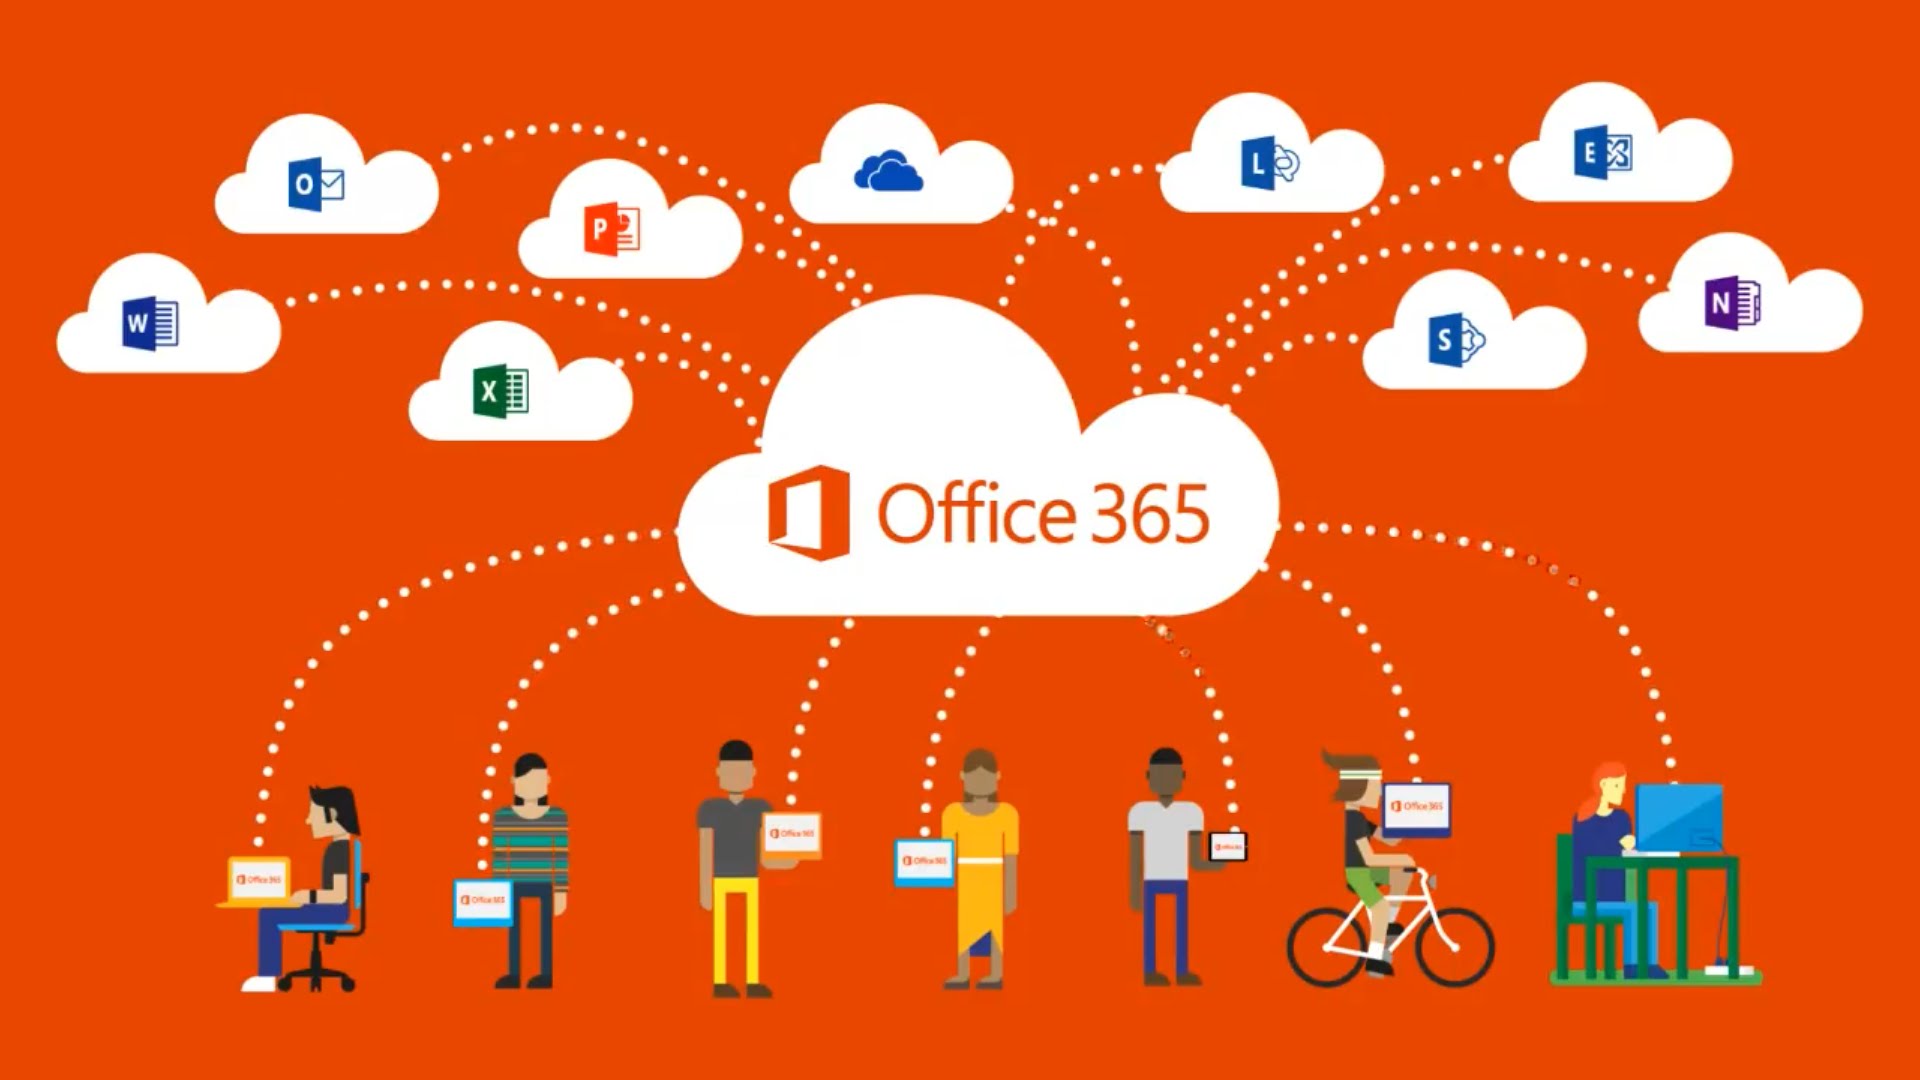 Training on Microsoft Office 365